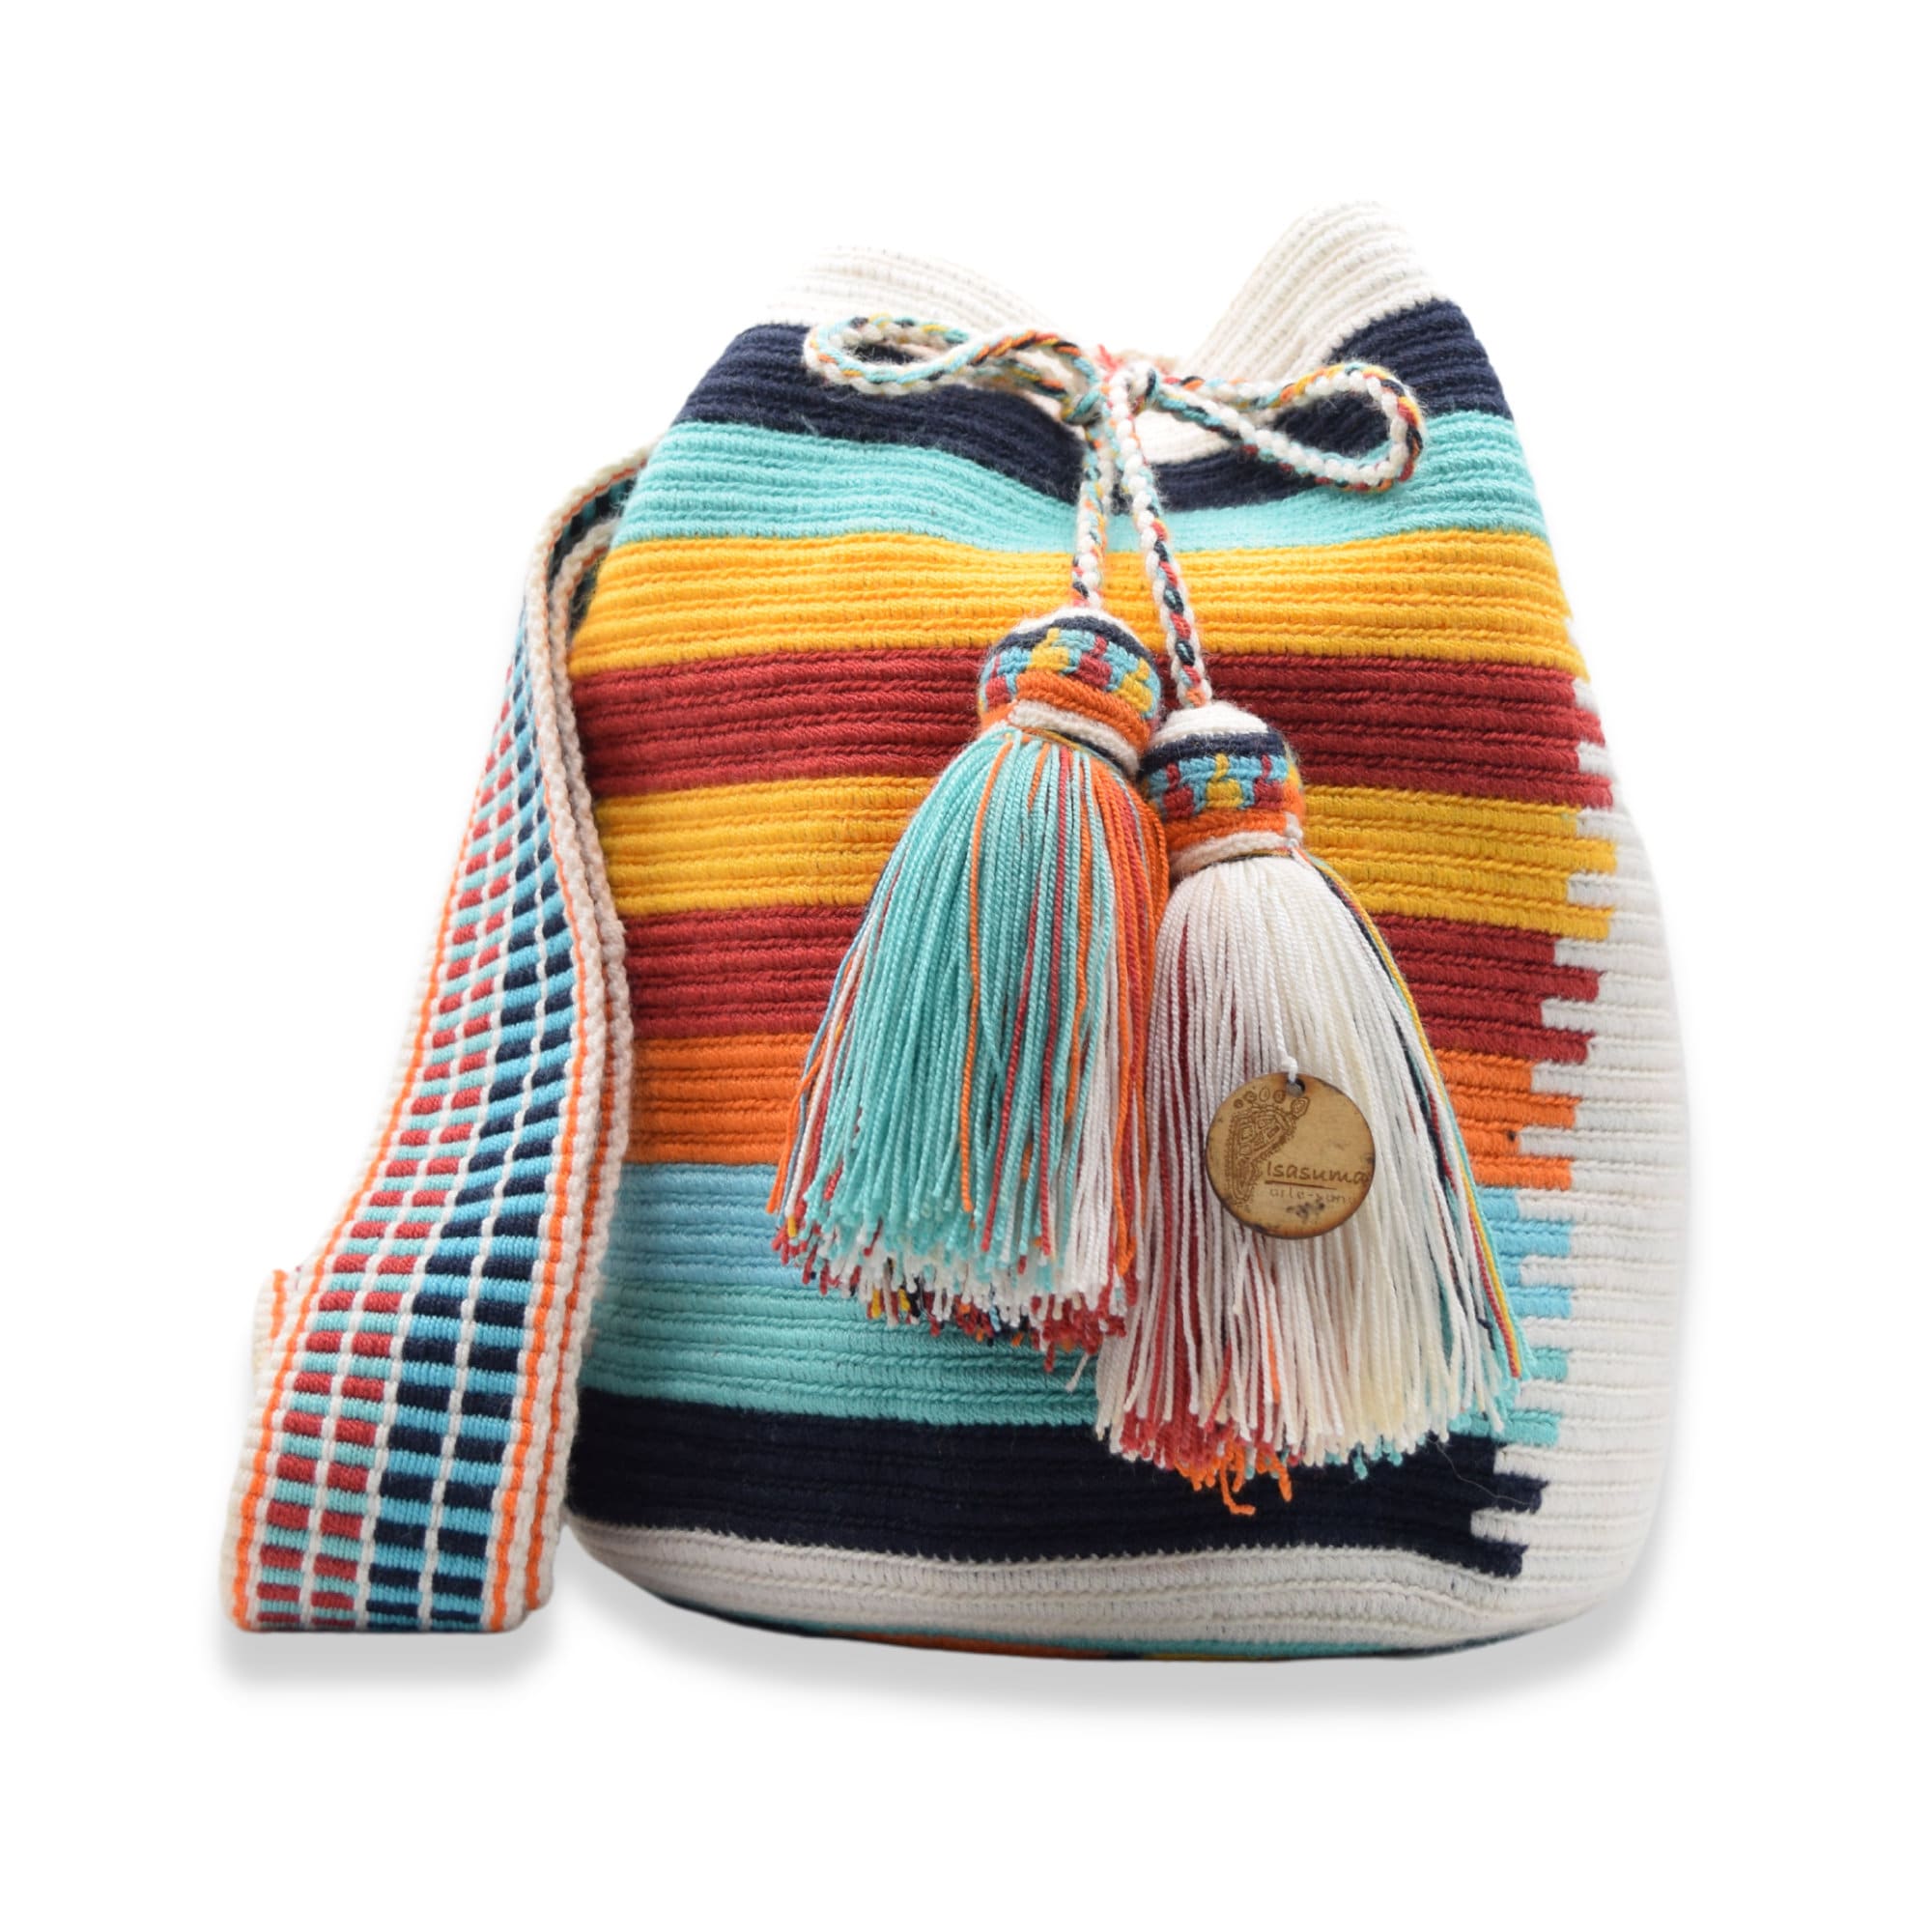 Deluxe Wayuu mochila bag | Large Tradicional | White colorful lines horizontal